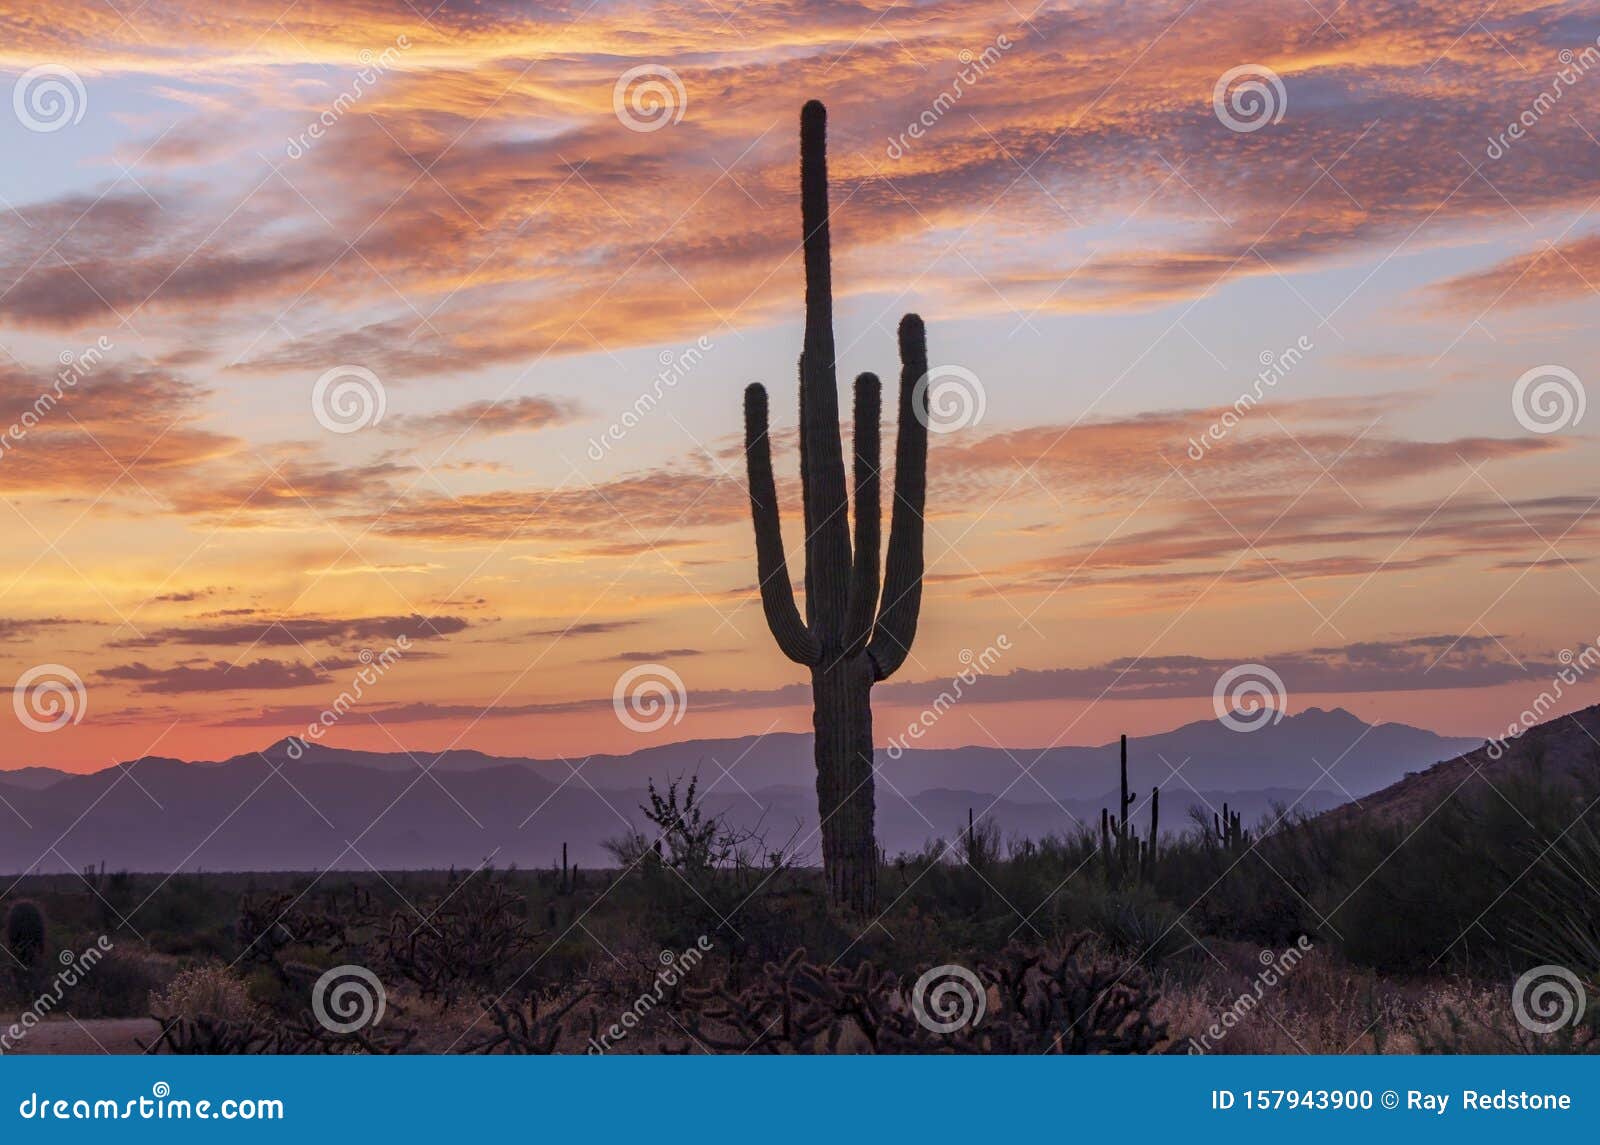 Saguaro Cactus with Colorful Skies before Sunrise Stock Photo - Image ...